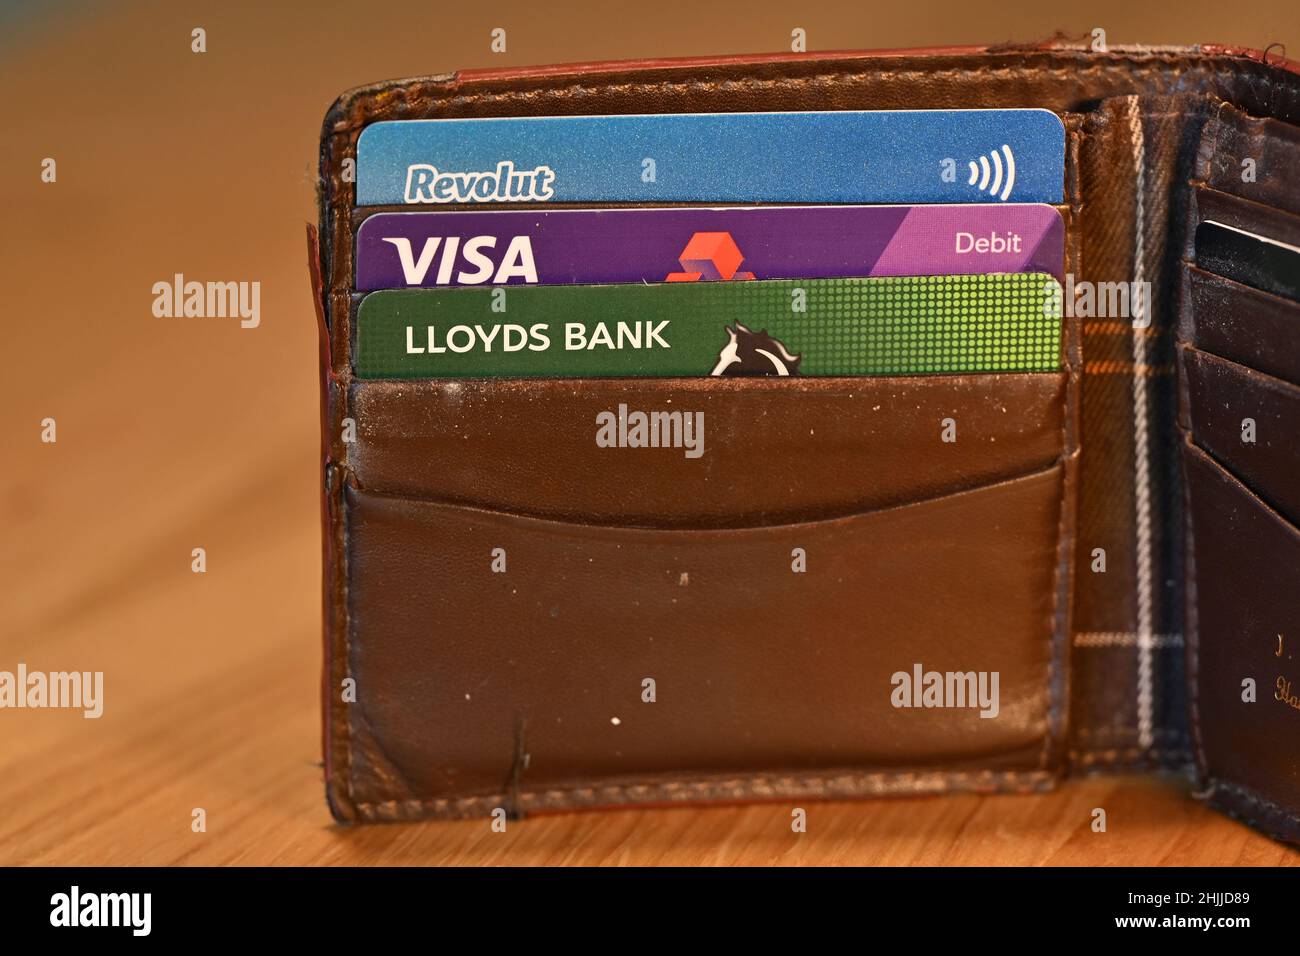 Revolut. Visa. Lloyds Bank. British Airways. London. UK. January 2022. Stock Photo